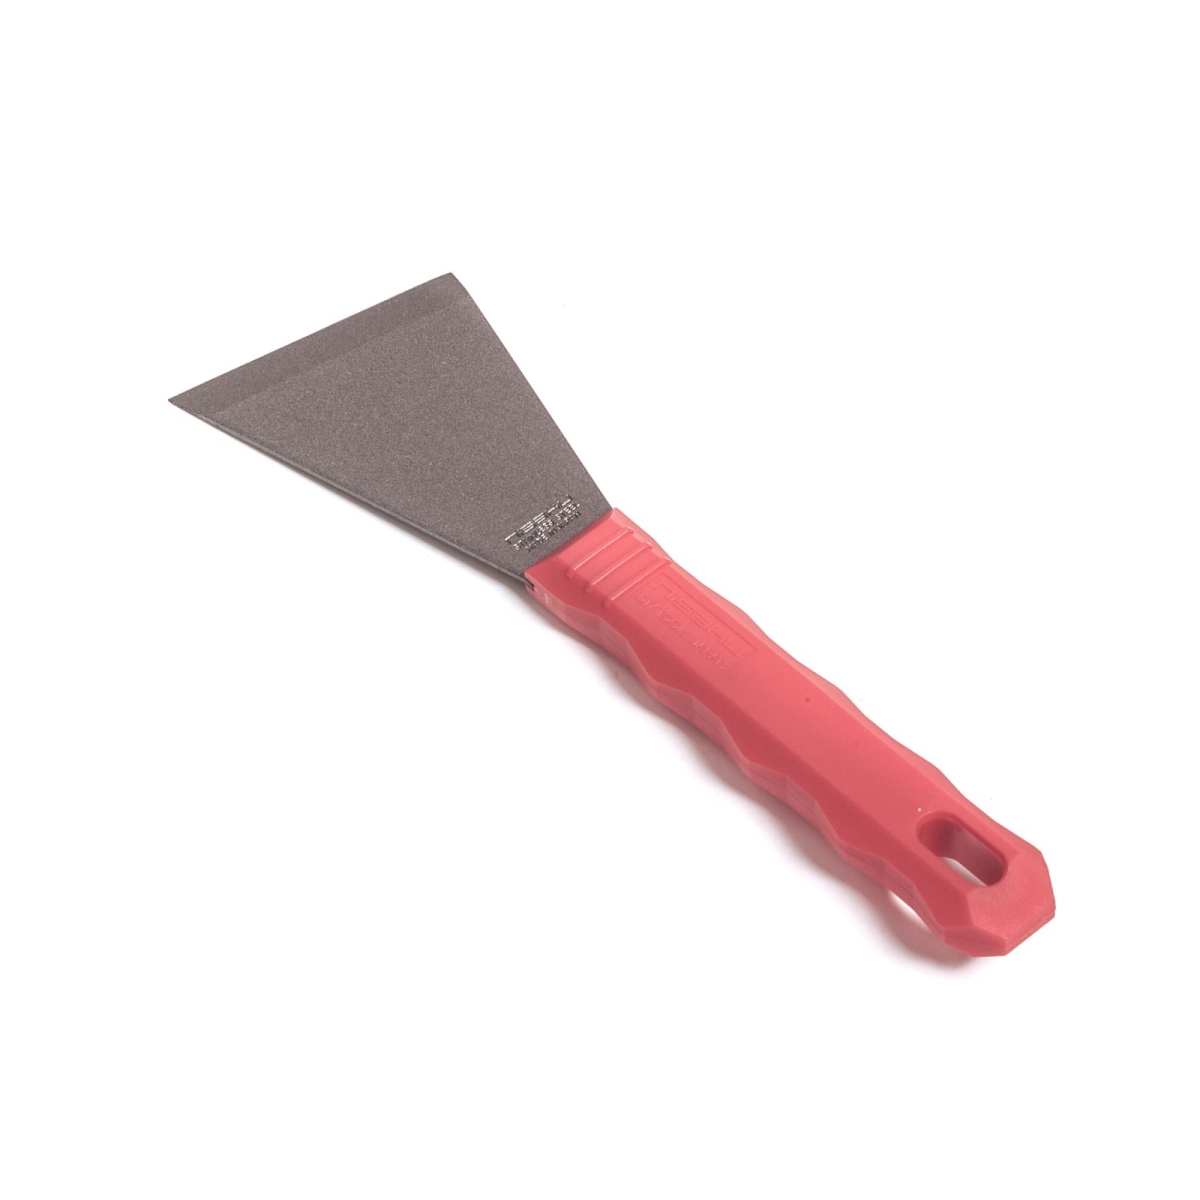 Njp5330 2.5 In. Blade Stainless Steel Fluorine Coated Y-shaped Scraper Knife